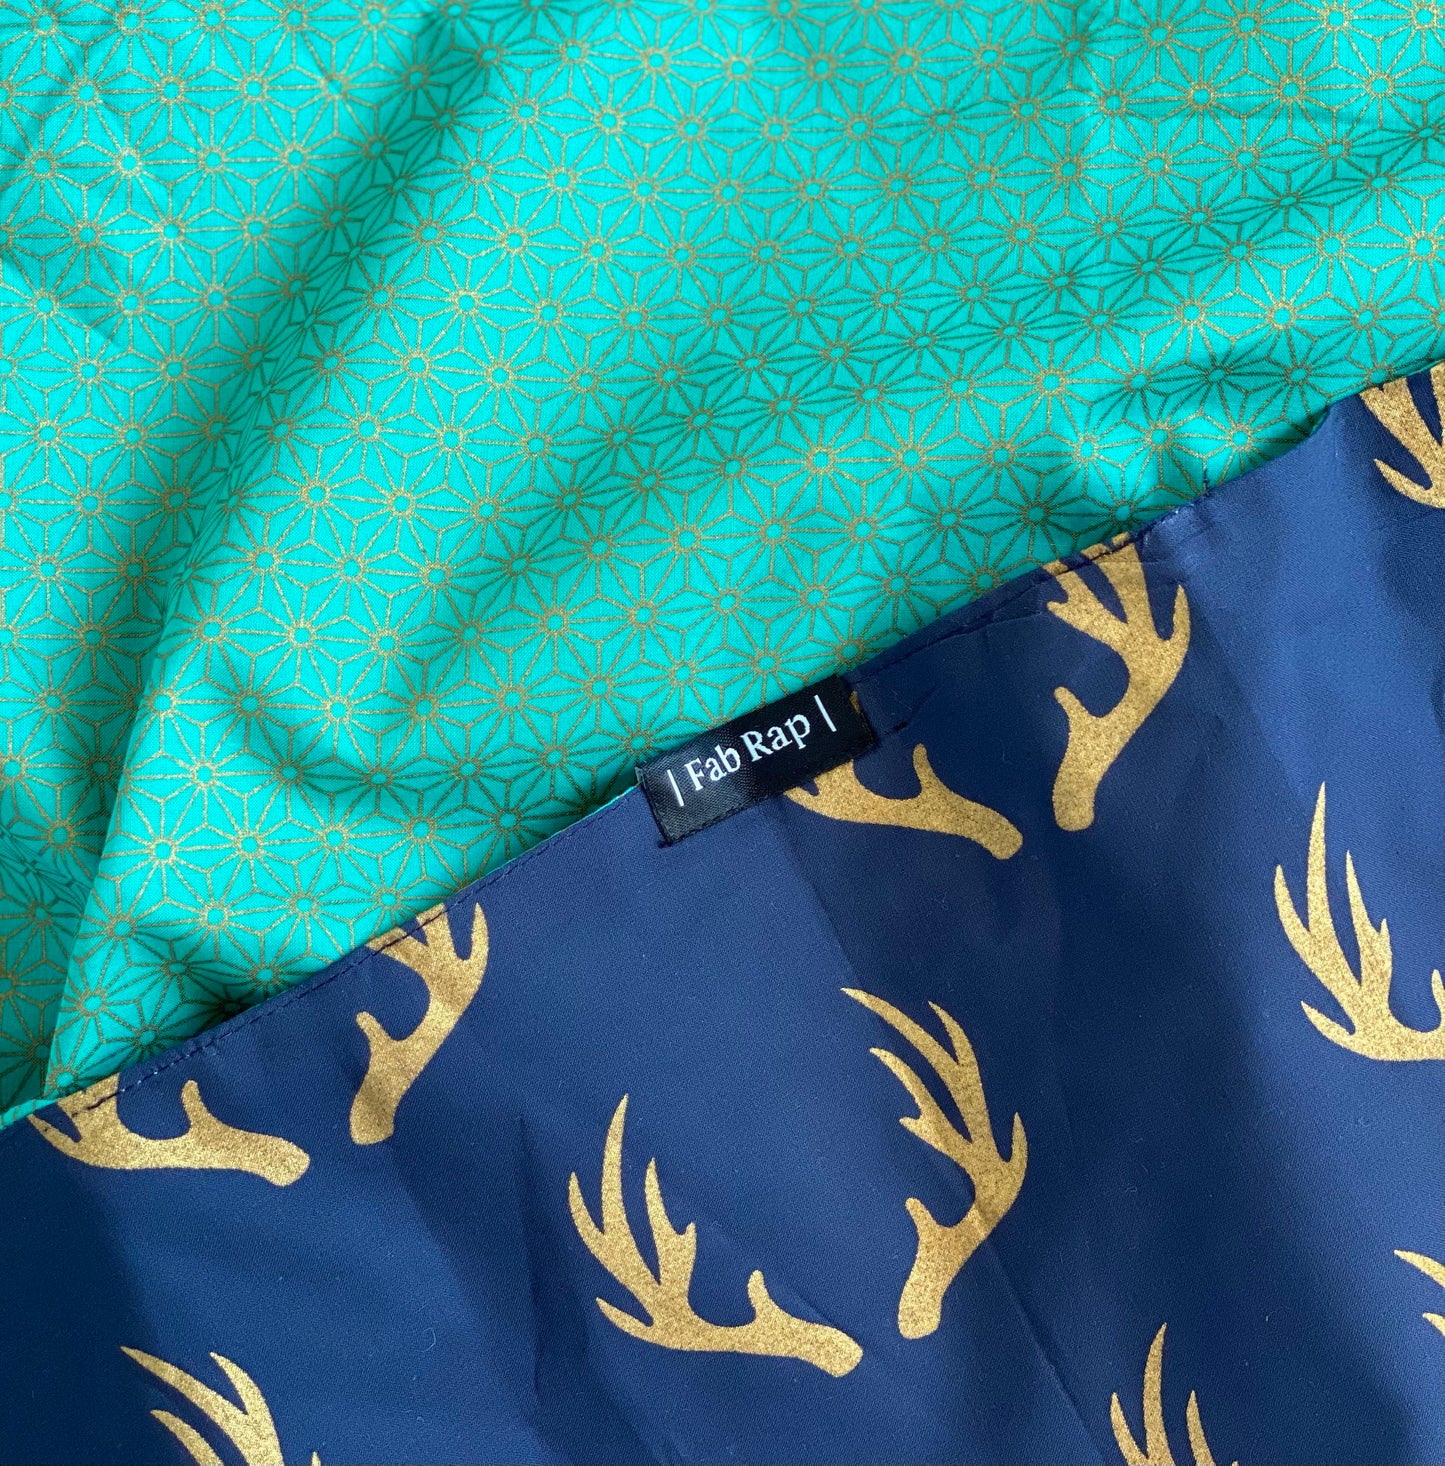 Fabric Gift Wrap Furoshiki Cloth - 9 Piece Jade & Midnight Reindeers Bundle